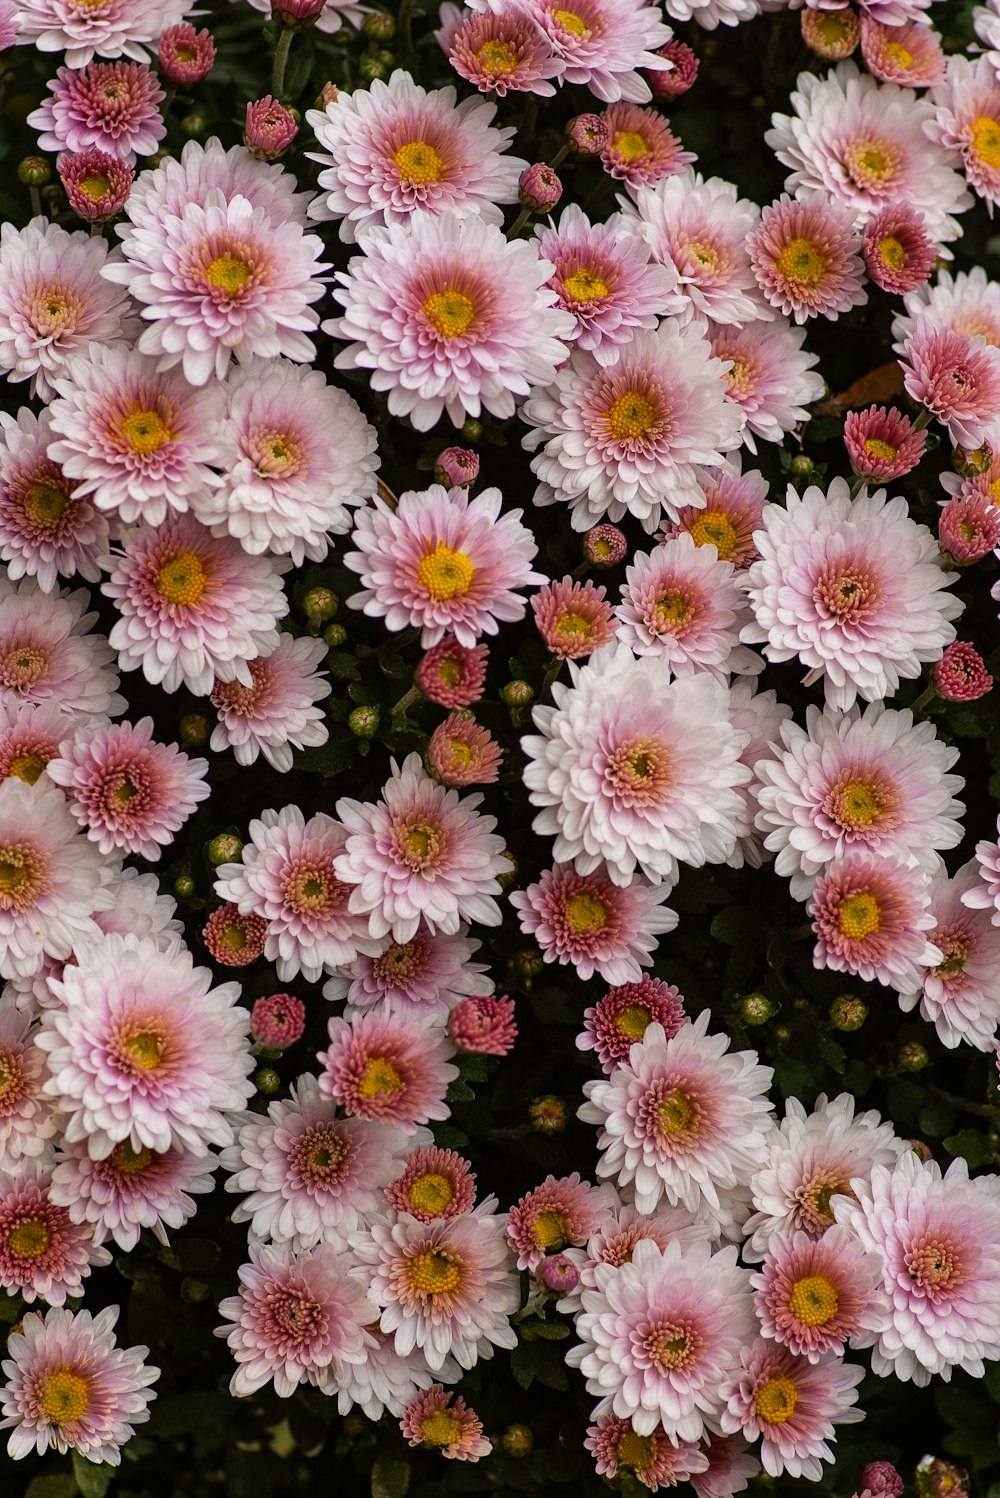 Flwoers de pétalas brancas e cor-de-rosa